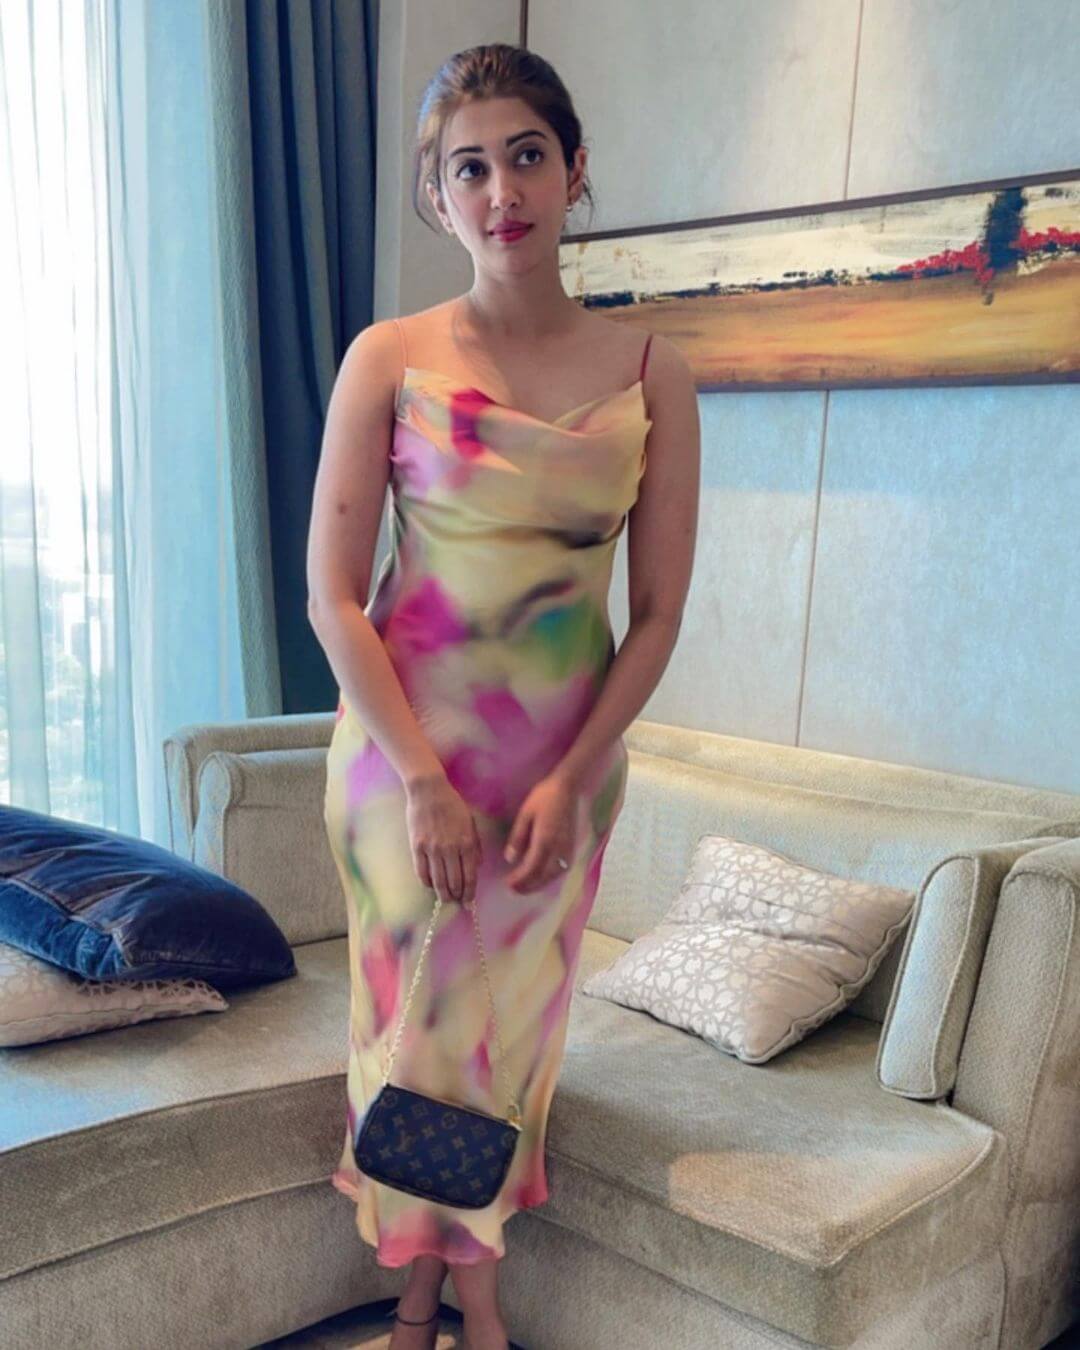 Pranitha Subhash Vibrant Satin Body Con Stunning Dress look is an Inspo : Pranitha Subhash Elegant and Classy Outfit Looks